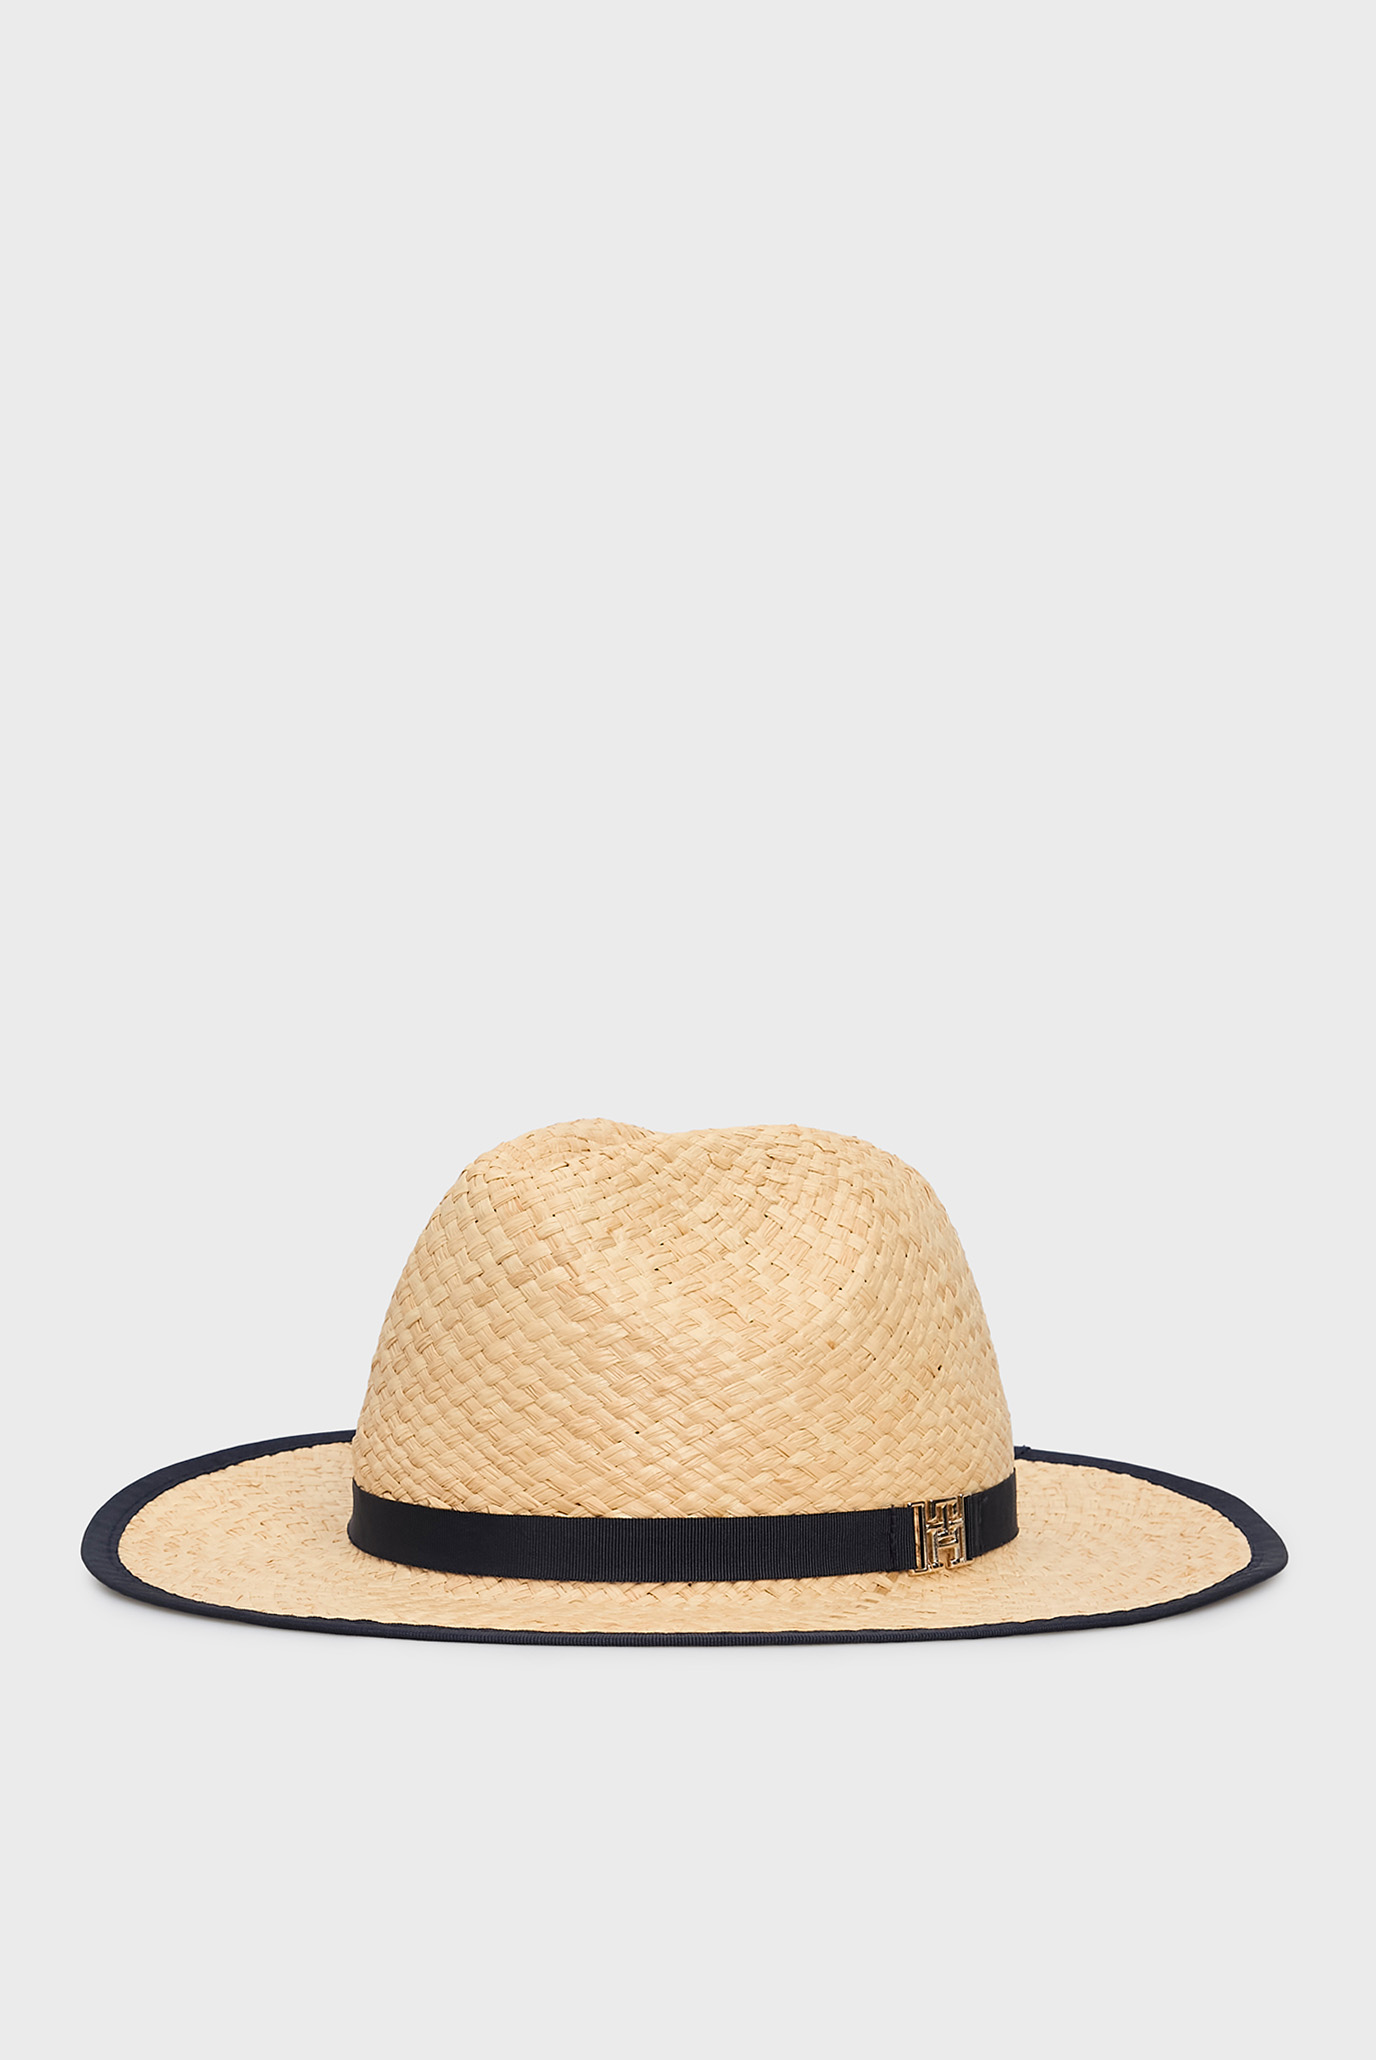 Жіночий солом'яний капелюх BEACH SUMMER STRAW FEDORA 1